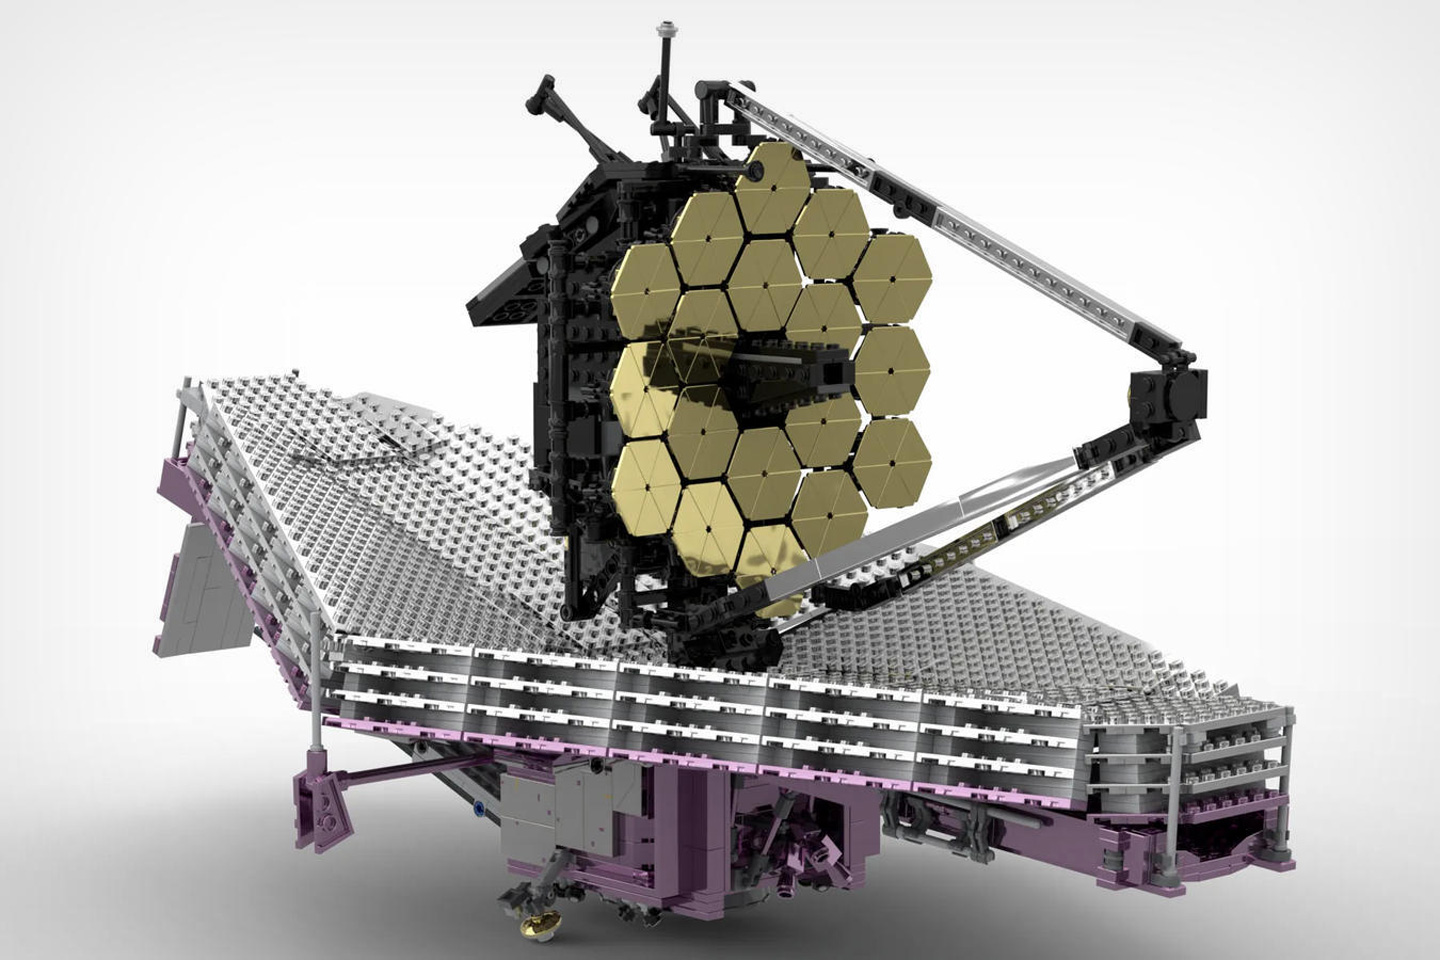 #LEGO replica of the NASA James Webb Space Telescope comes with the same complex folding design!